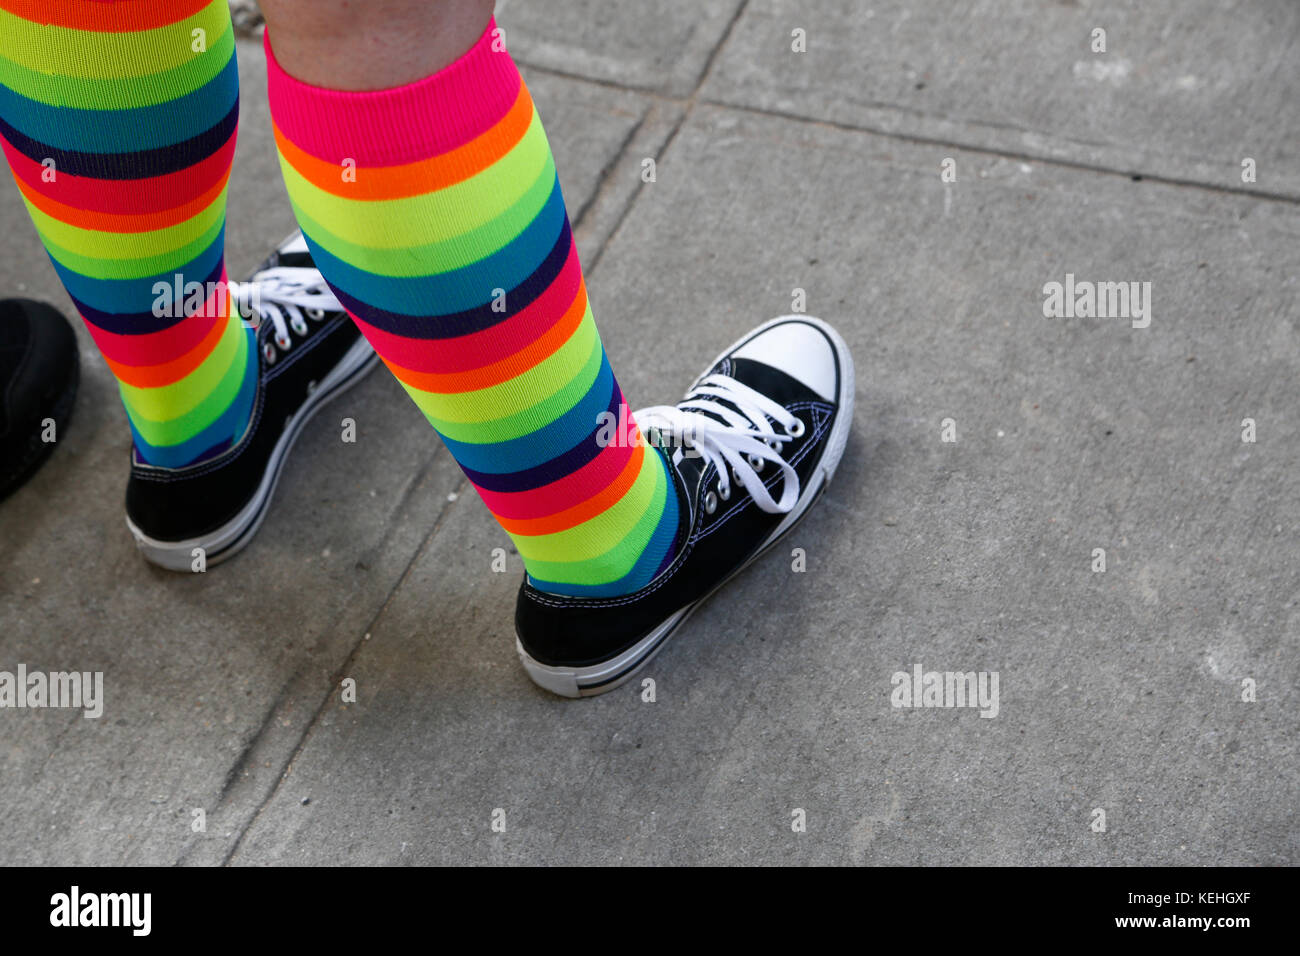 Persona che indossa calze arcobaleno Foto stock - Alamy